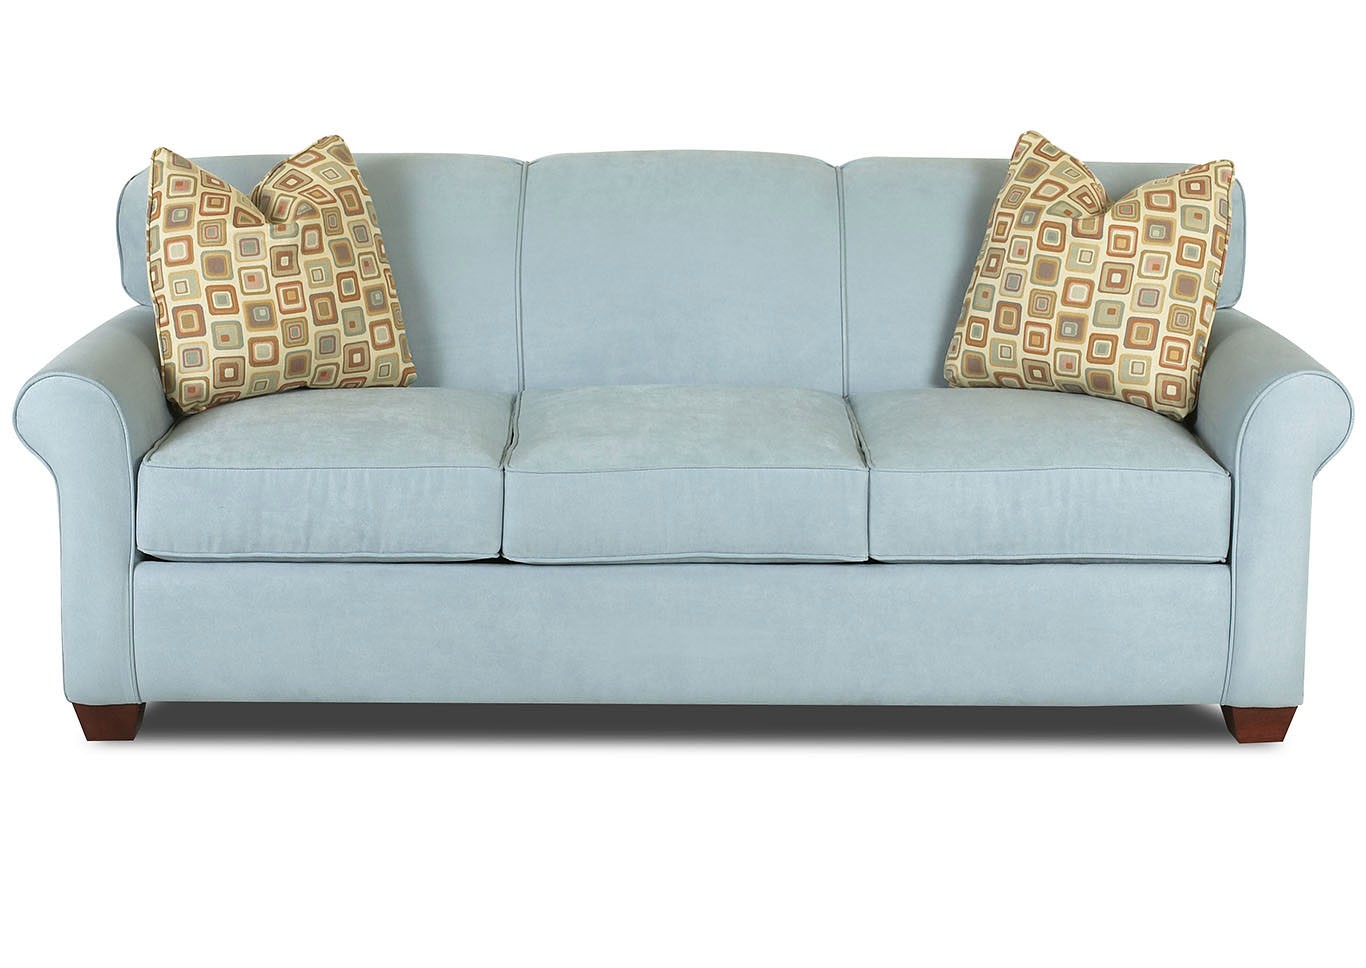 Mayhew sky blue stationary fabric sofa weiss furniture